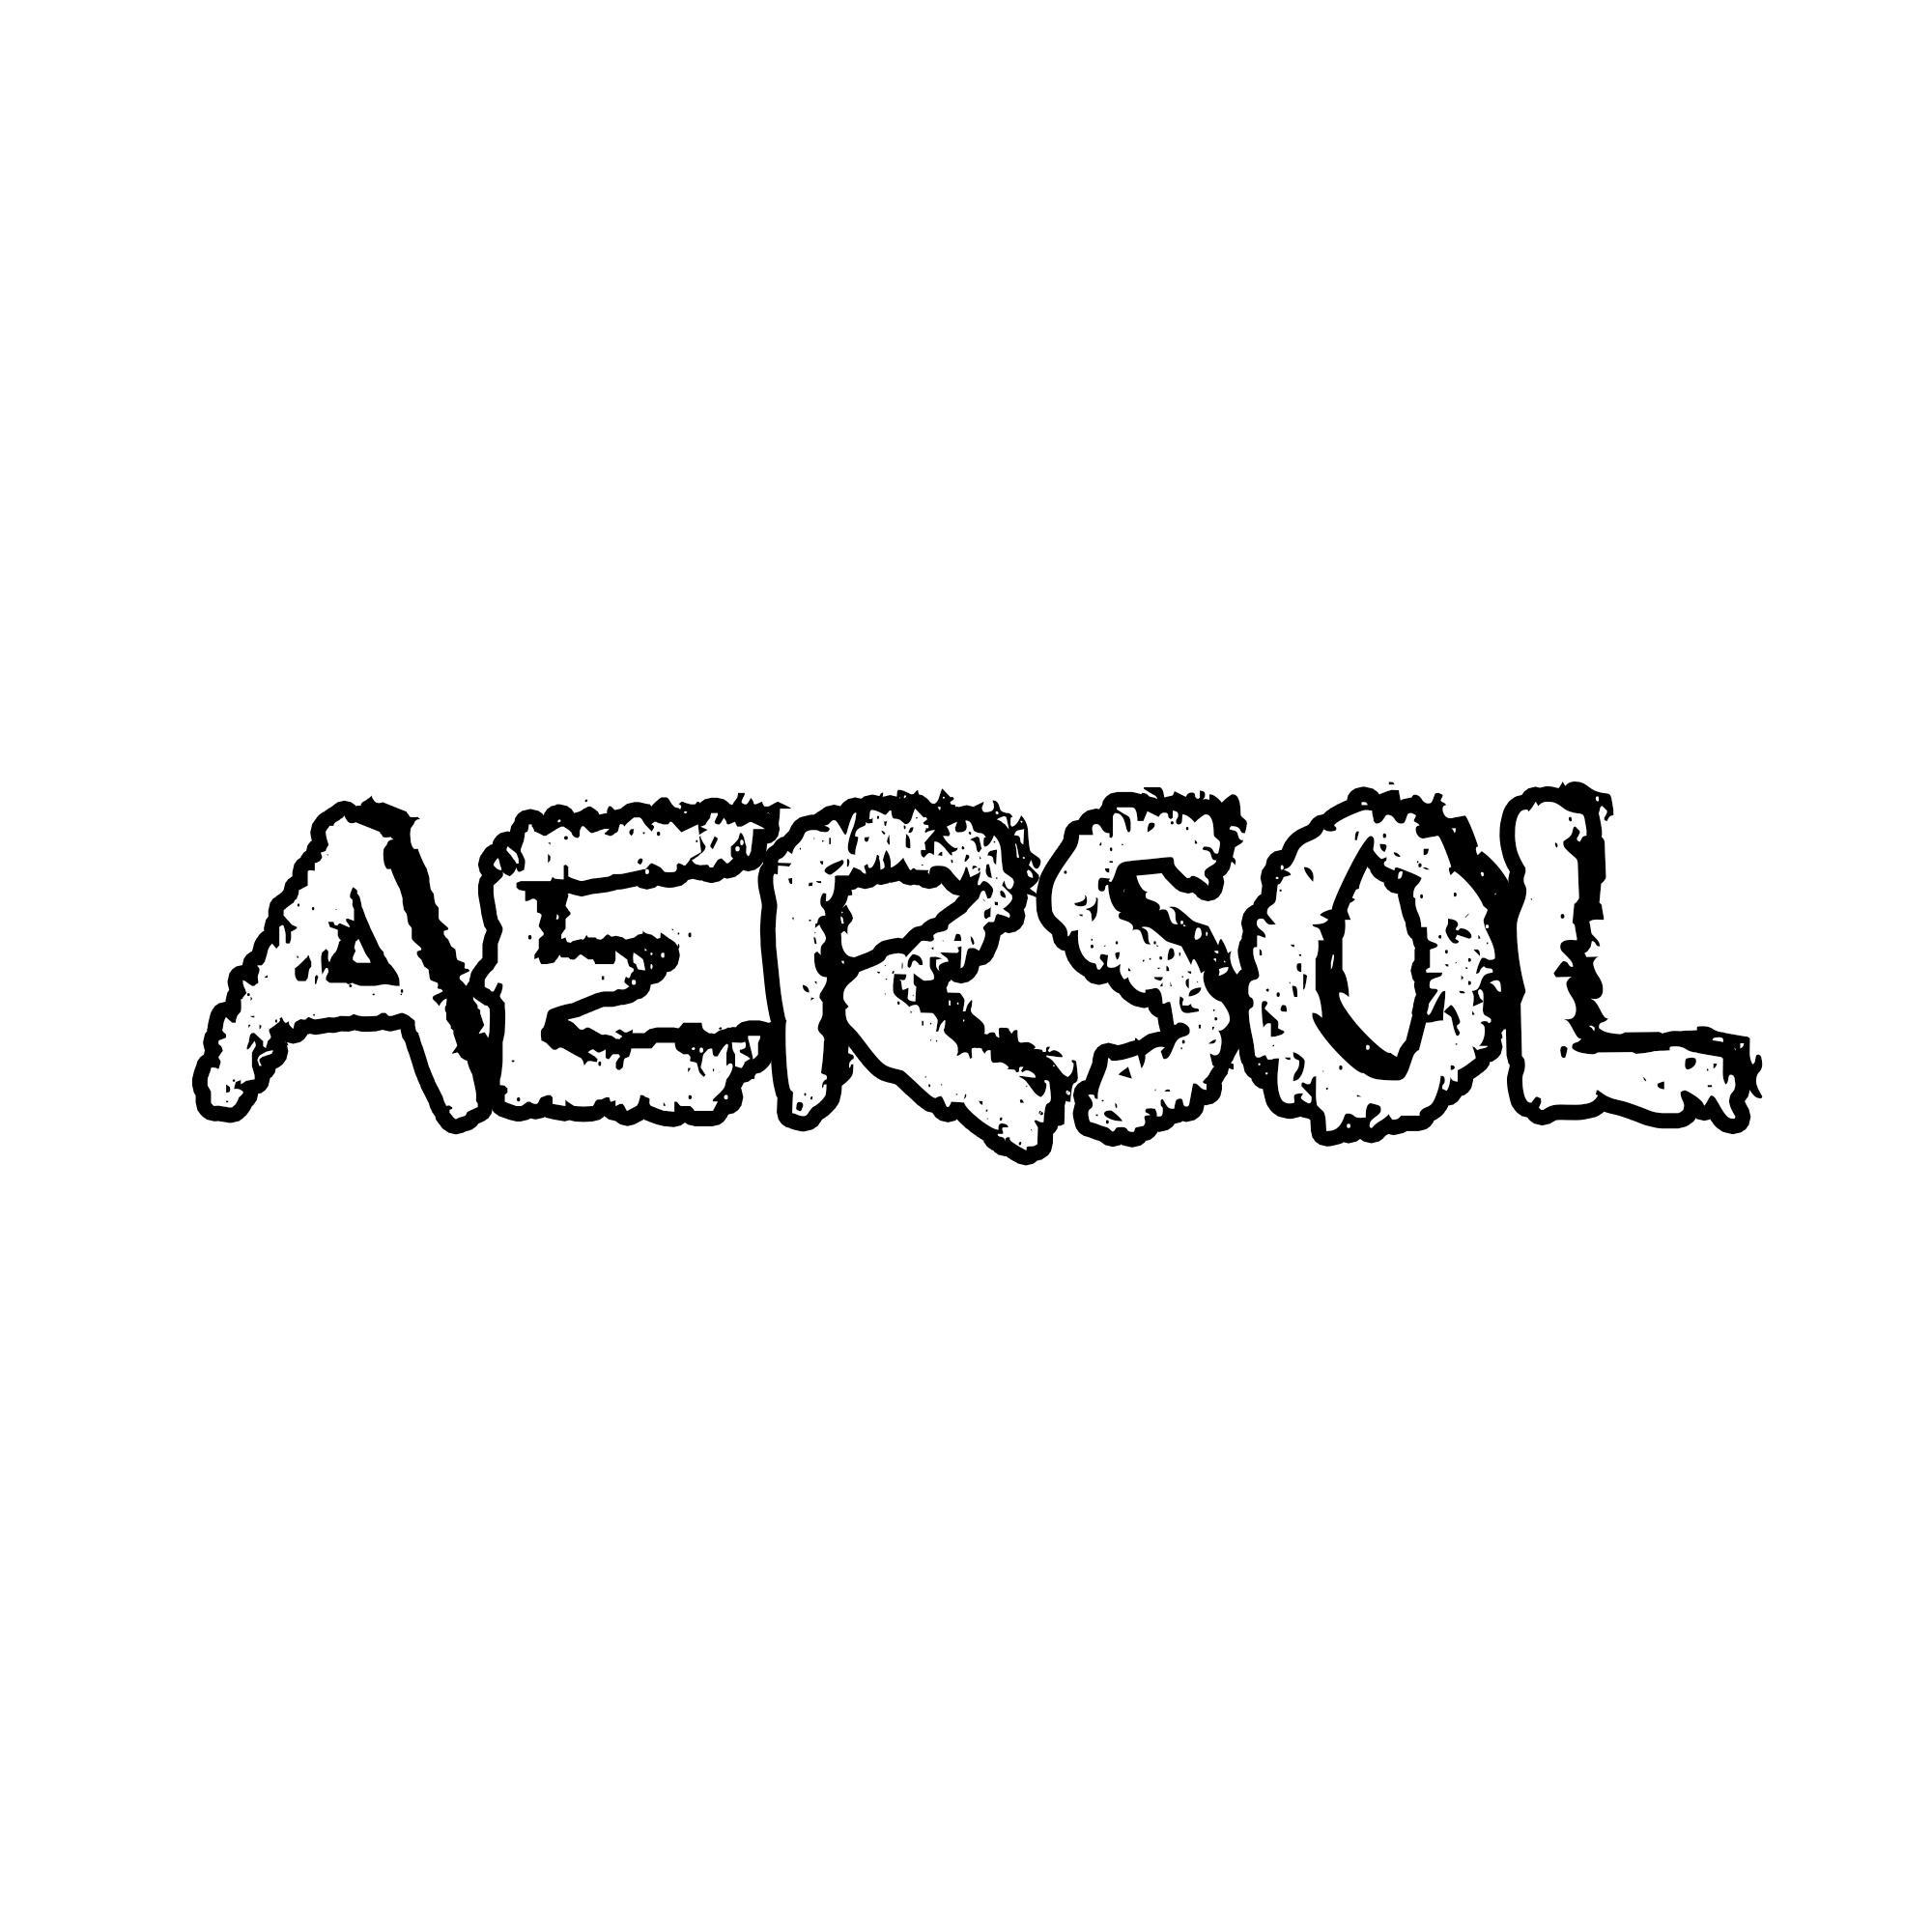 AERSOL